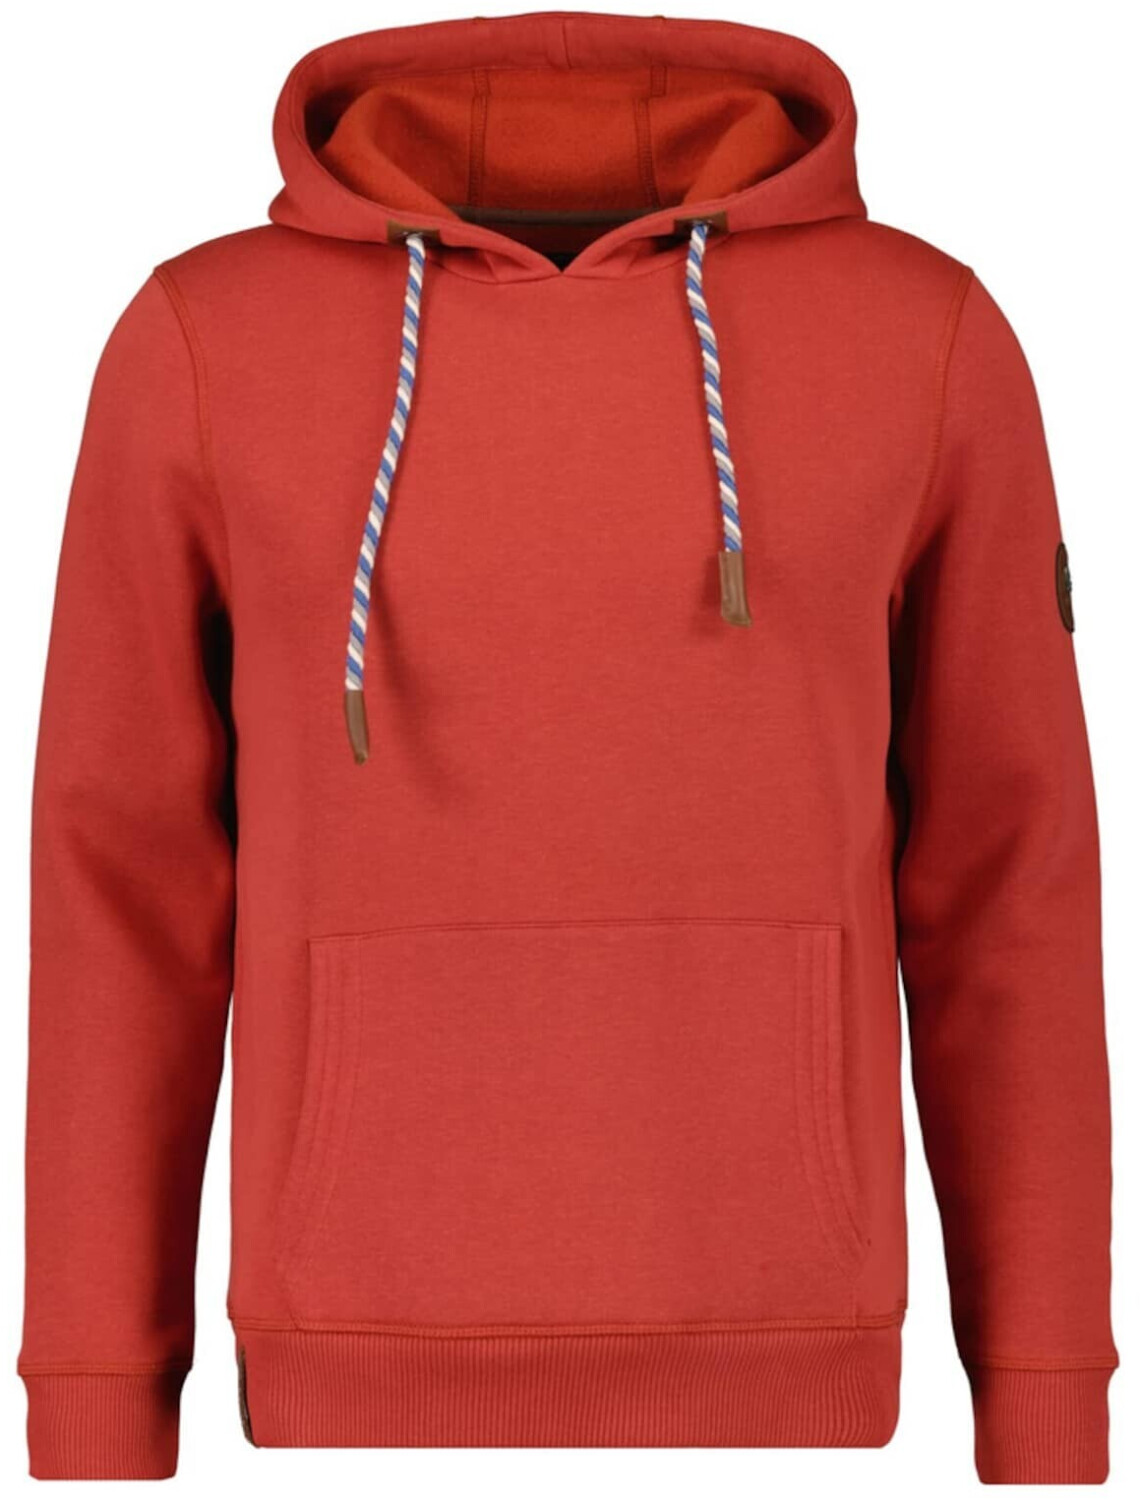 Ragman Hoody-Sweater (809096-063) rostrot ab € | Preisvergleich 59,95 bei